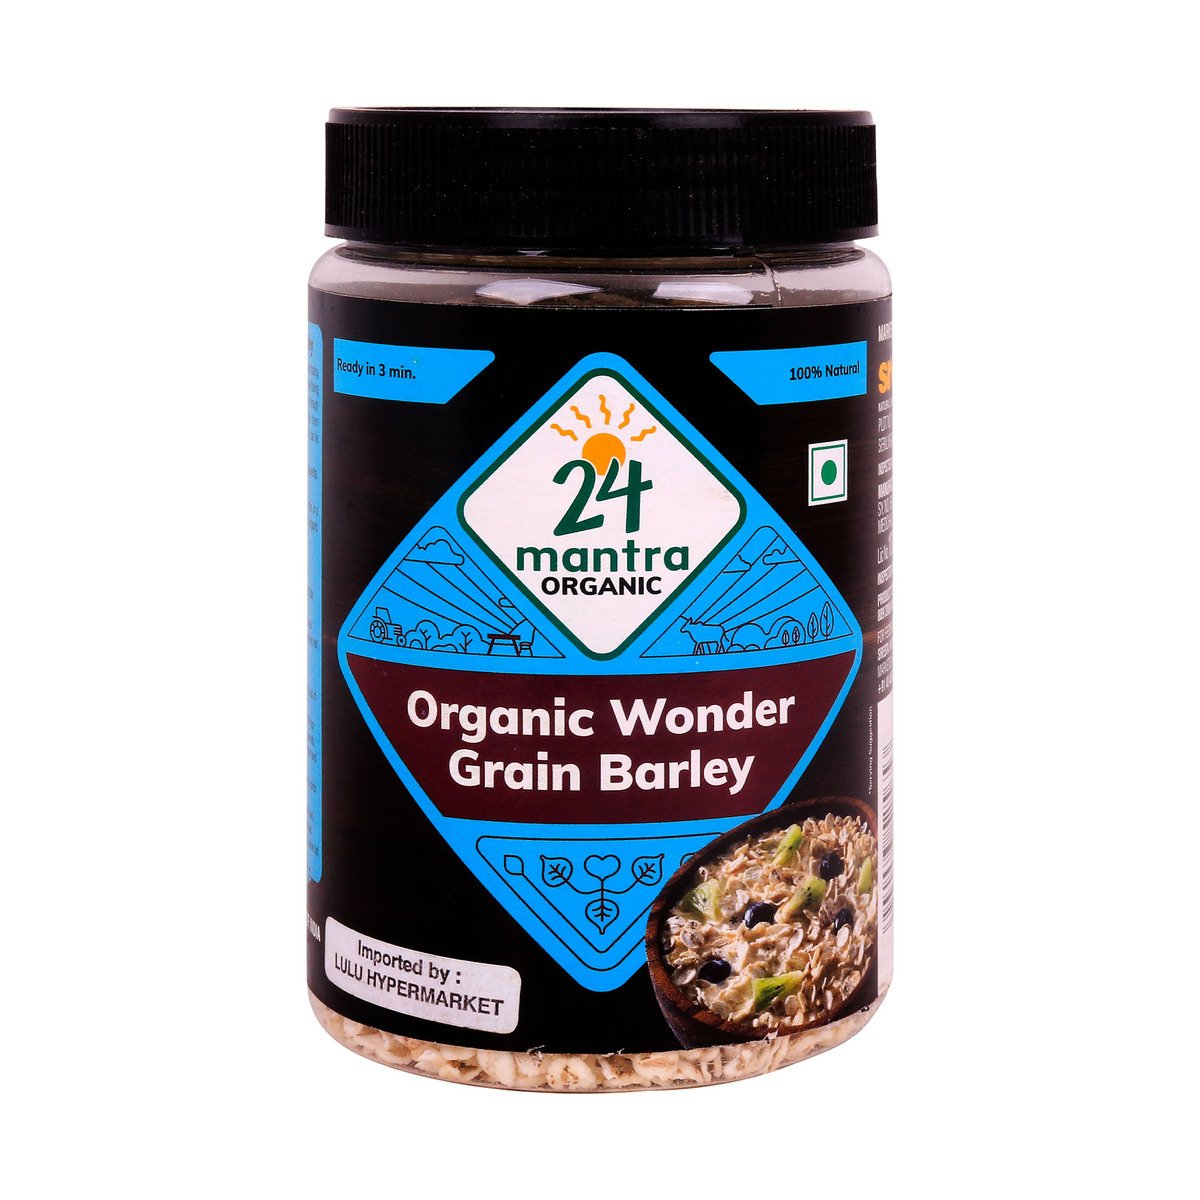 24 Mantra Organic Wonder Grain Barley 300g